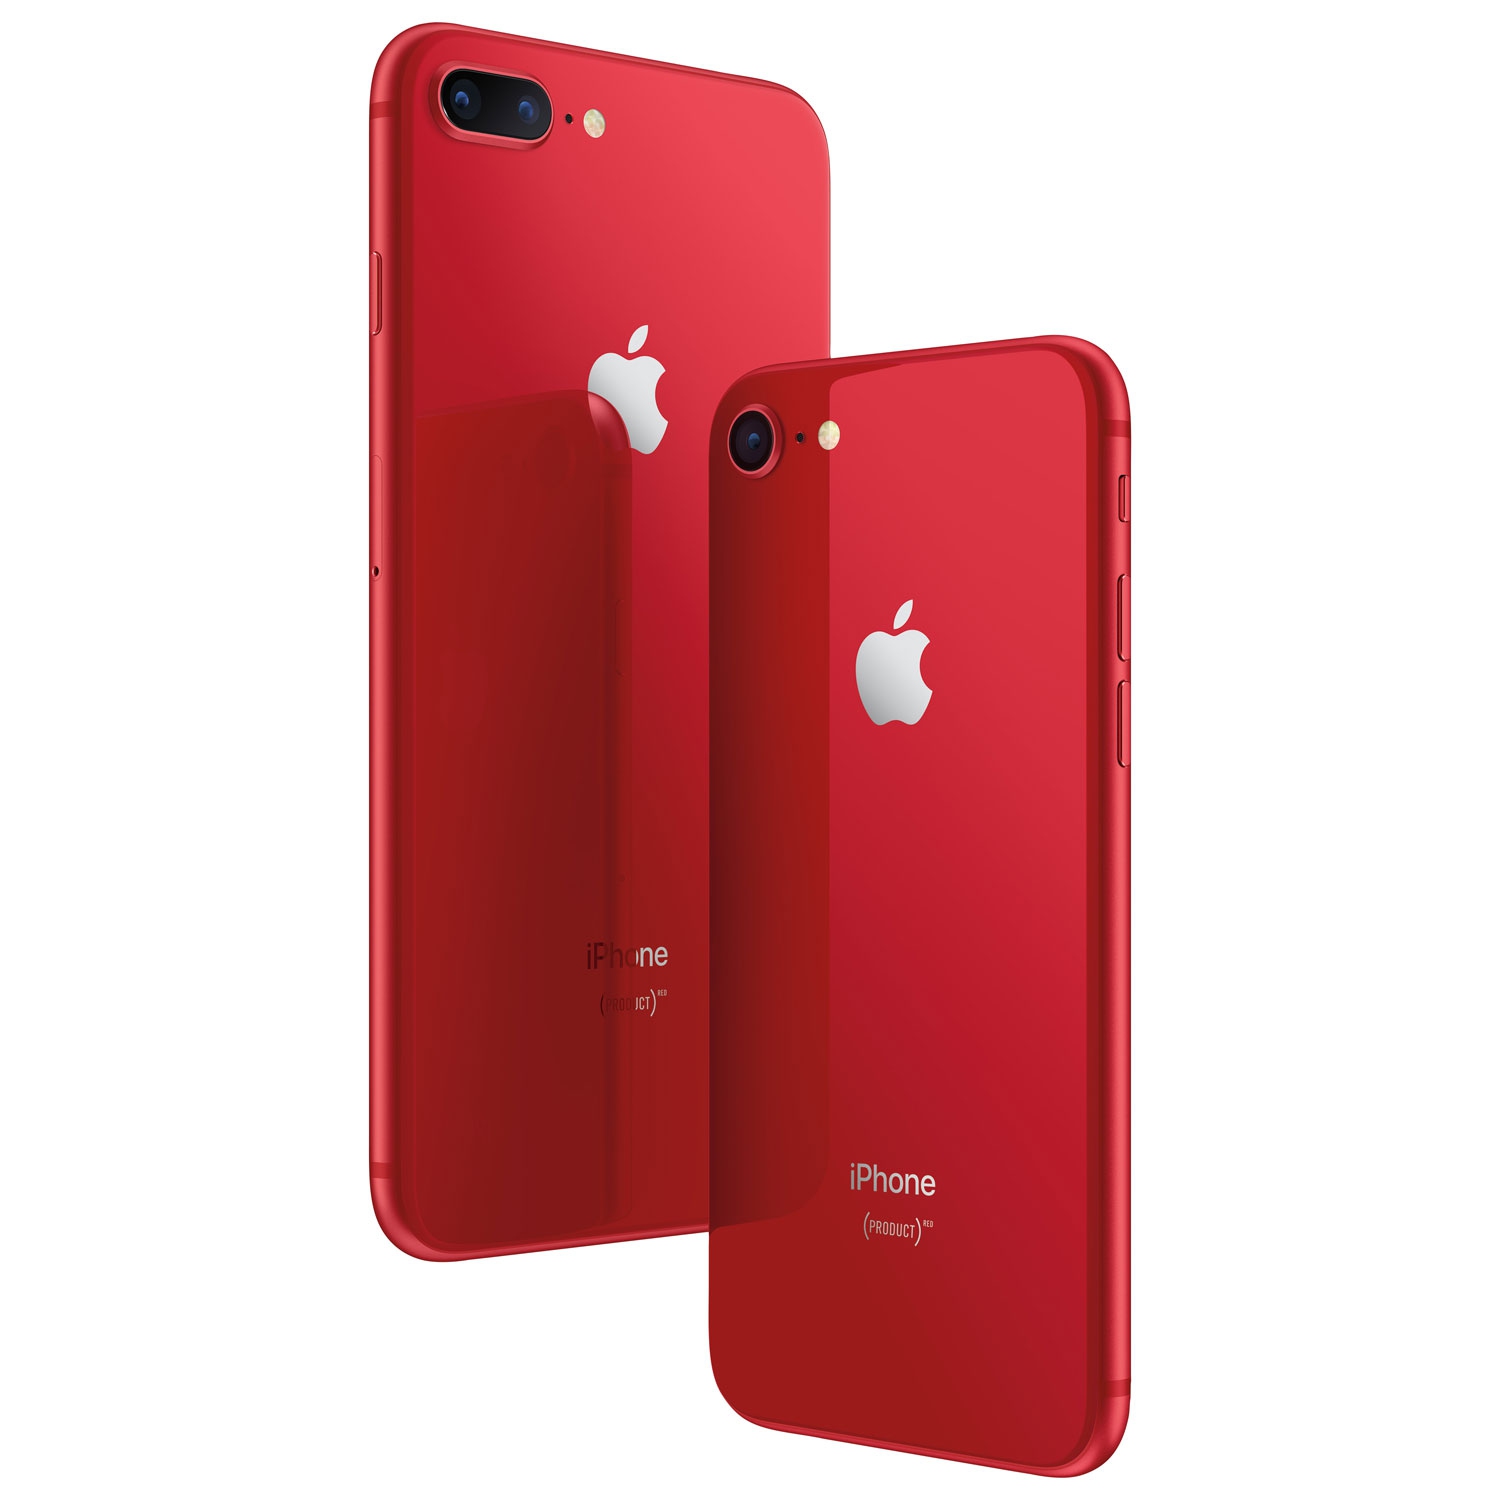 Apple iPhone 8 Plus 64GB Smartphone - (Product)RED - Unlocked 